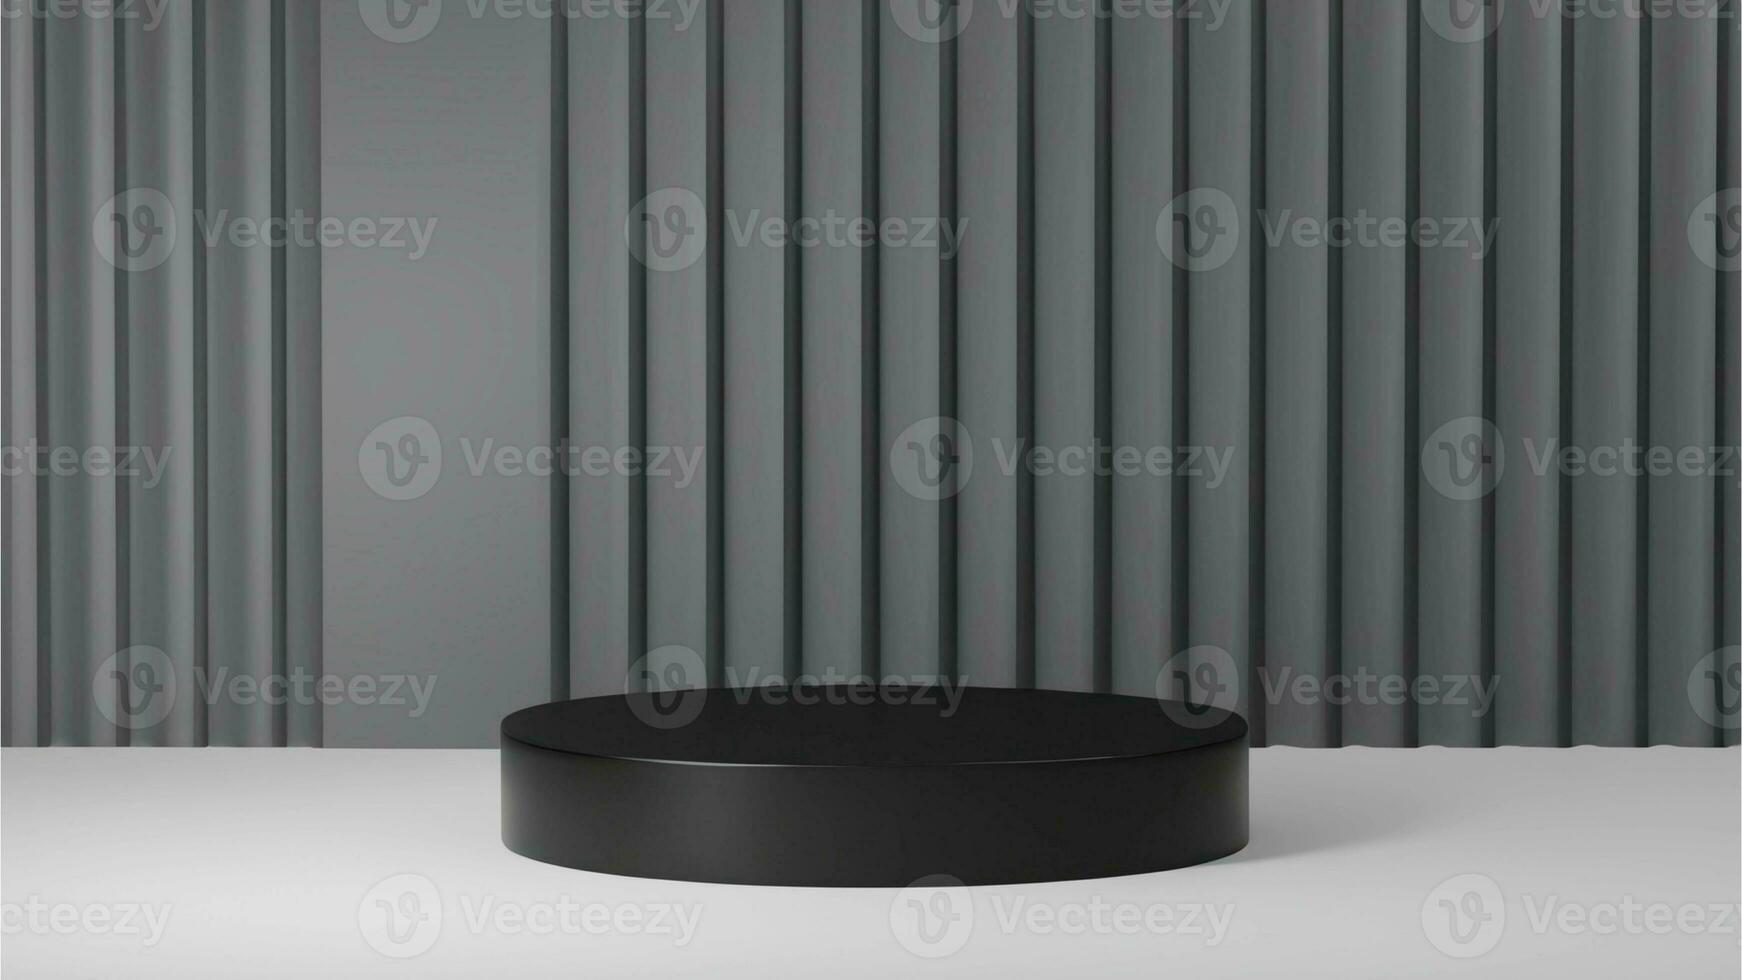 minimal svart modern cylinder låda piedestal eller podium för produkt monter. abstrakt geometrisk former bakgrund. stå produkt mockup. tömma skede. 3d framställa illustration foto